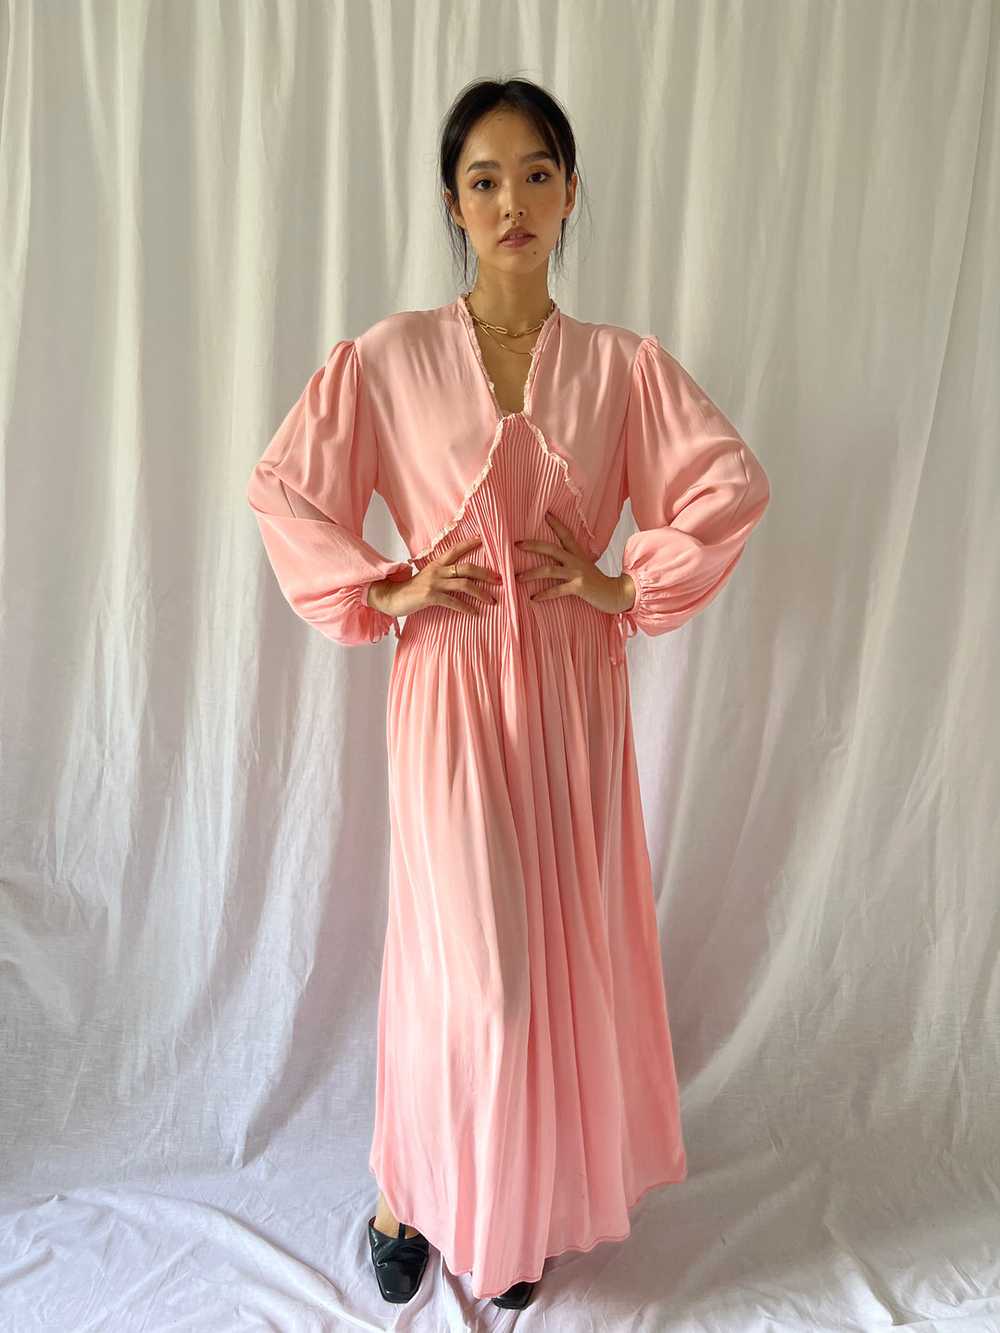 Vintage 30s pink dress long balloon sleeves - image 5